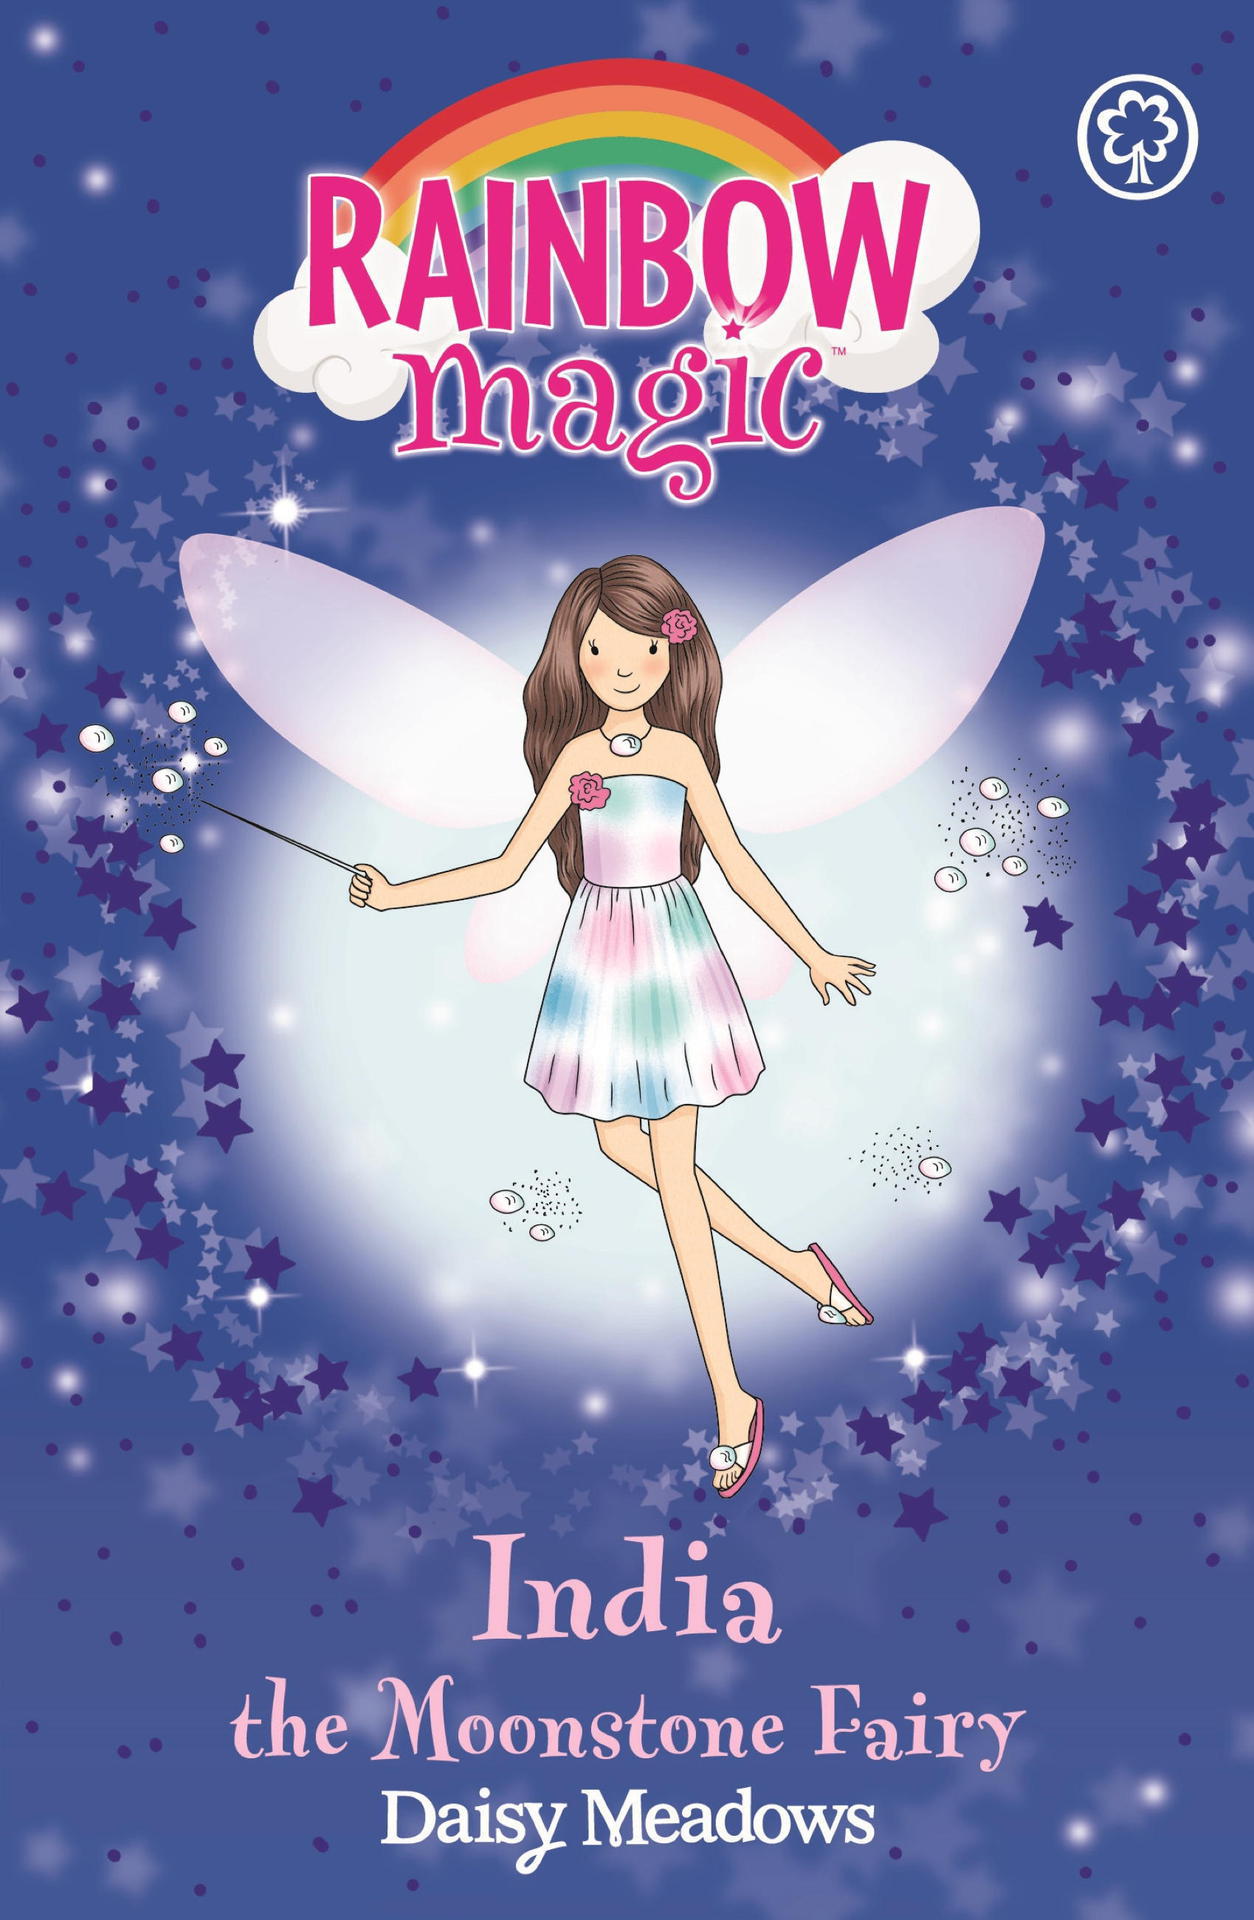 India the Moonstone Fairy: The Jewel Fairies (Rainbow Magic)